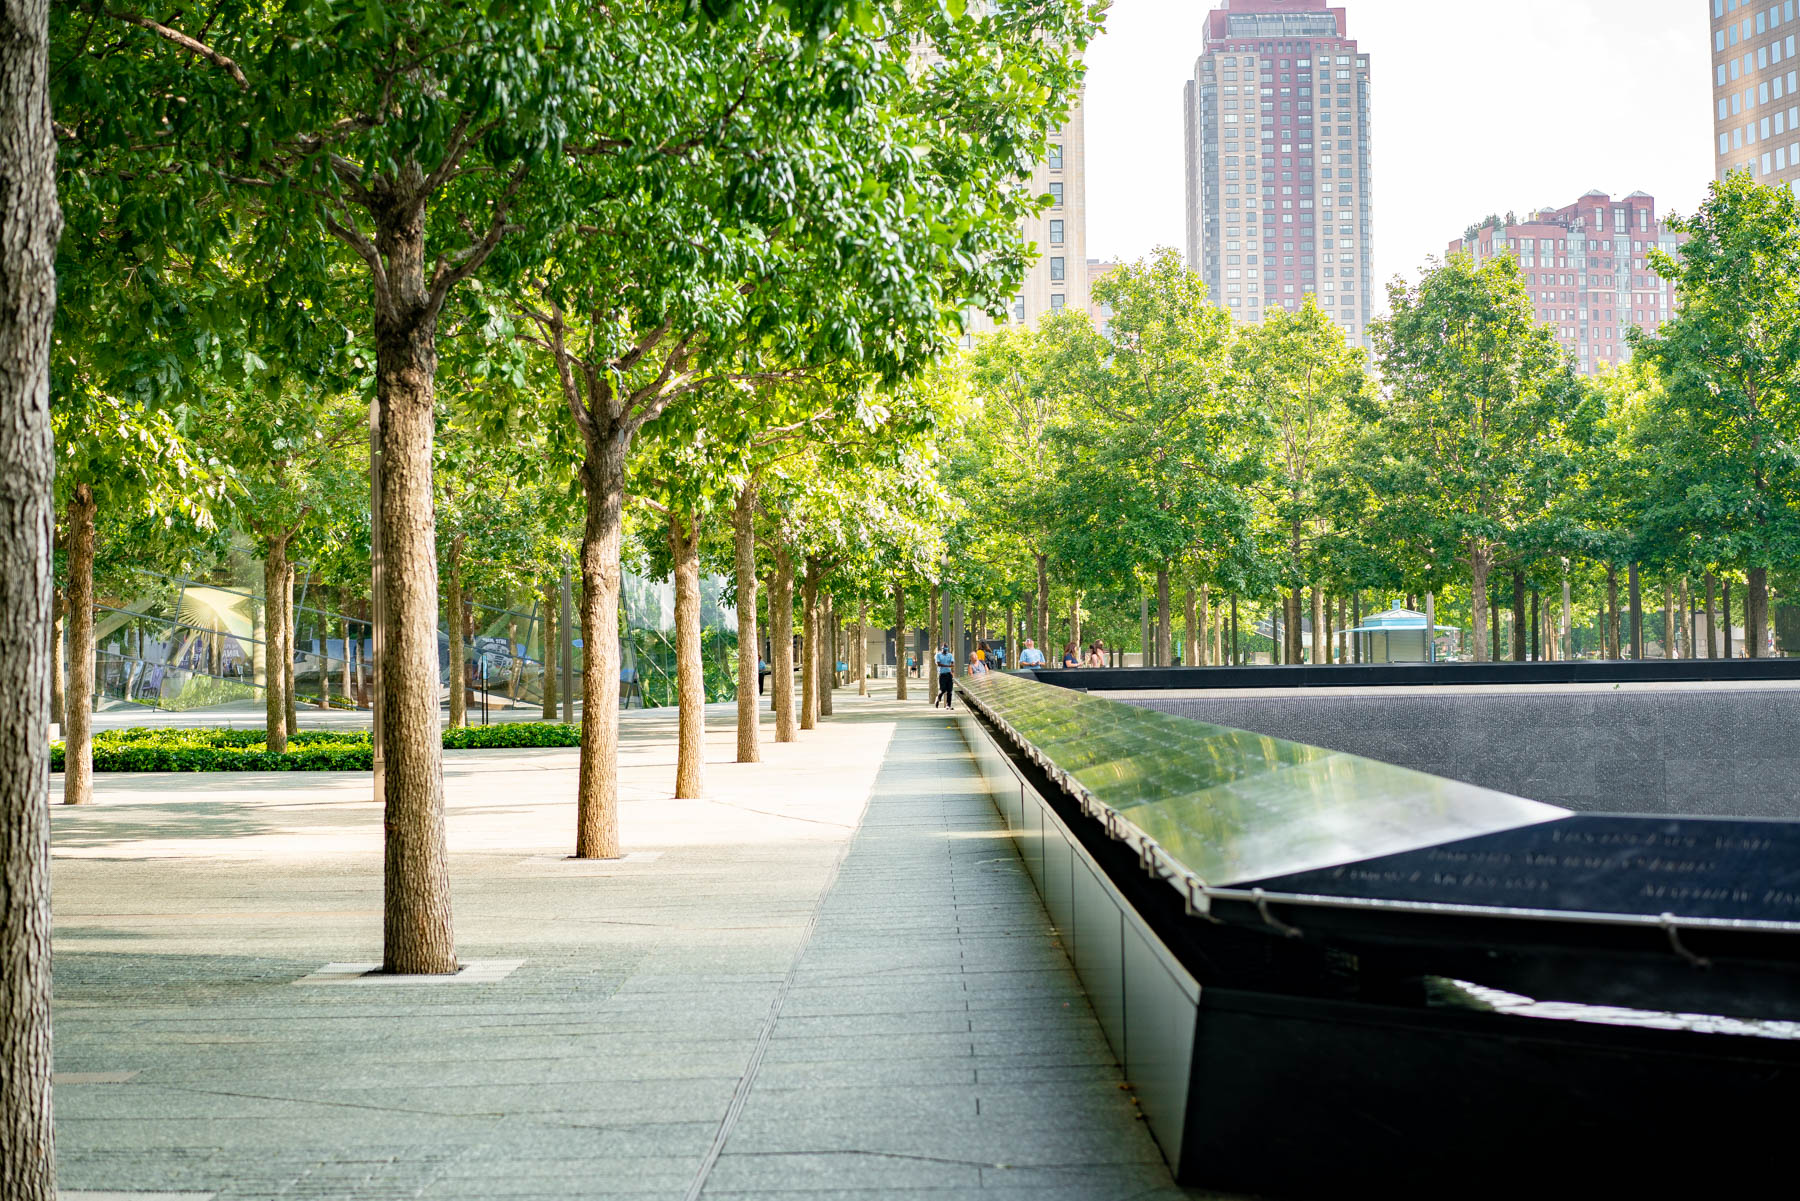 9/11 memorial nyc, best historic landmarks america